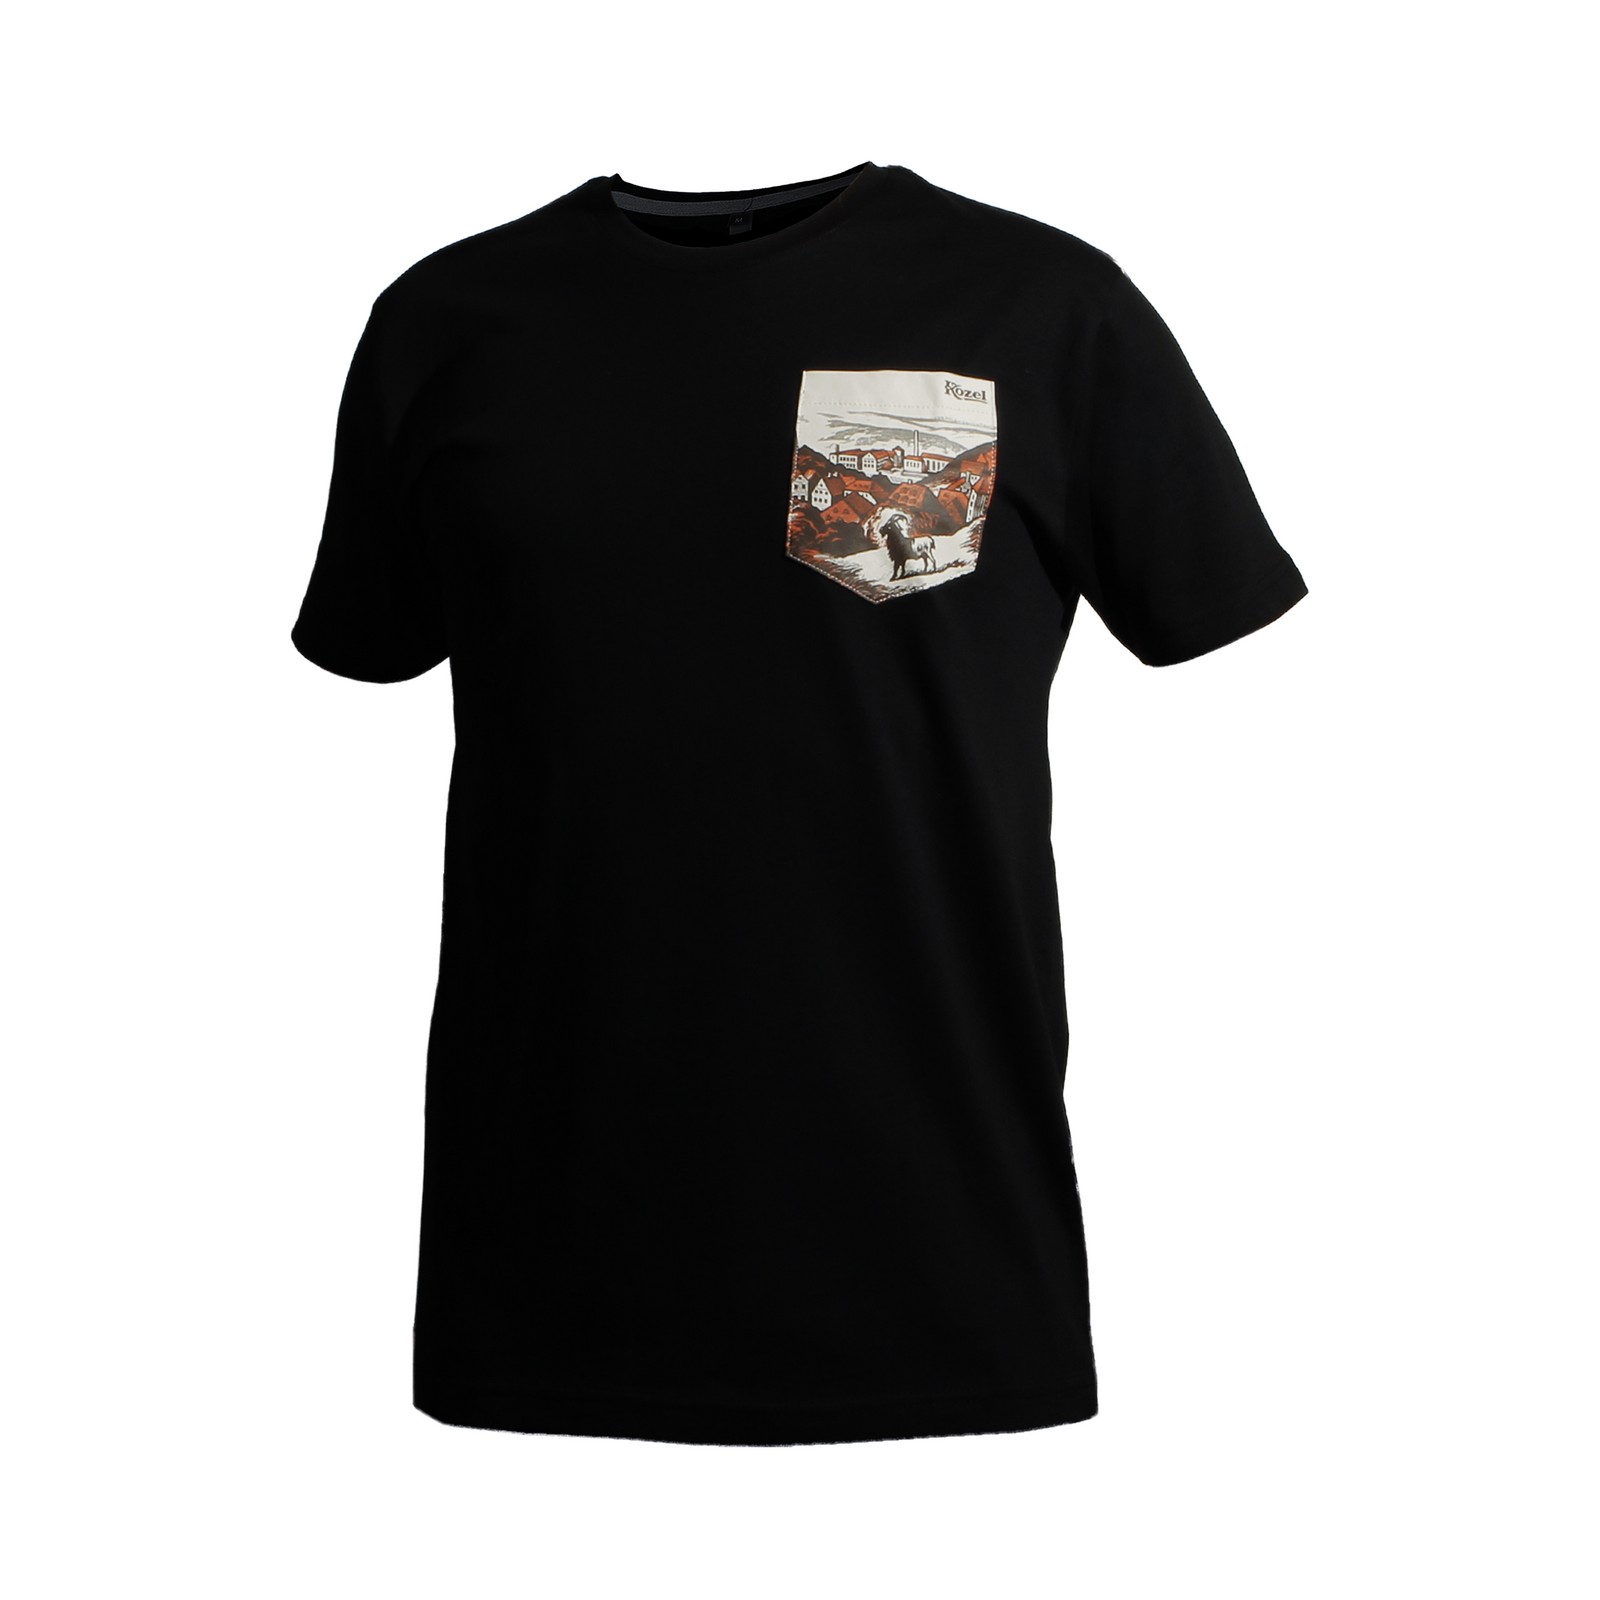 Black Kozel T-Shirt, Gentlemen's